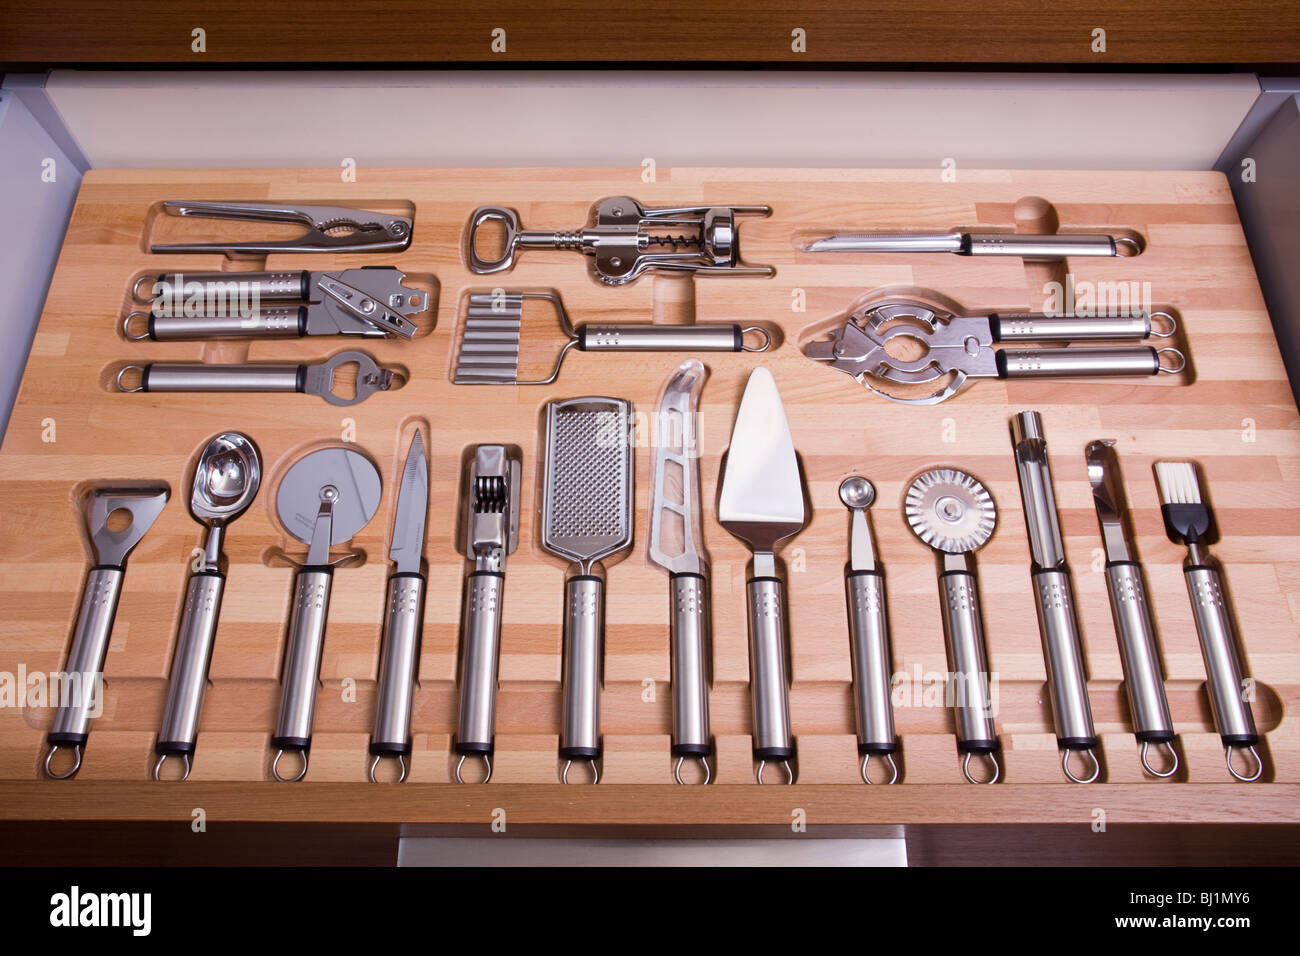 Various kitchen tools in organized kitchen drawer Stock Photo